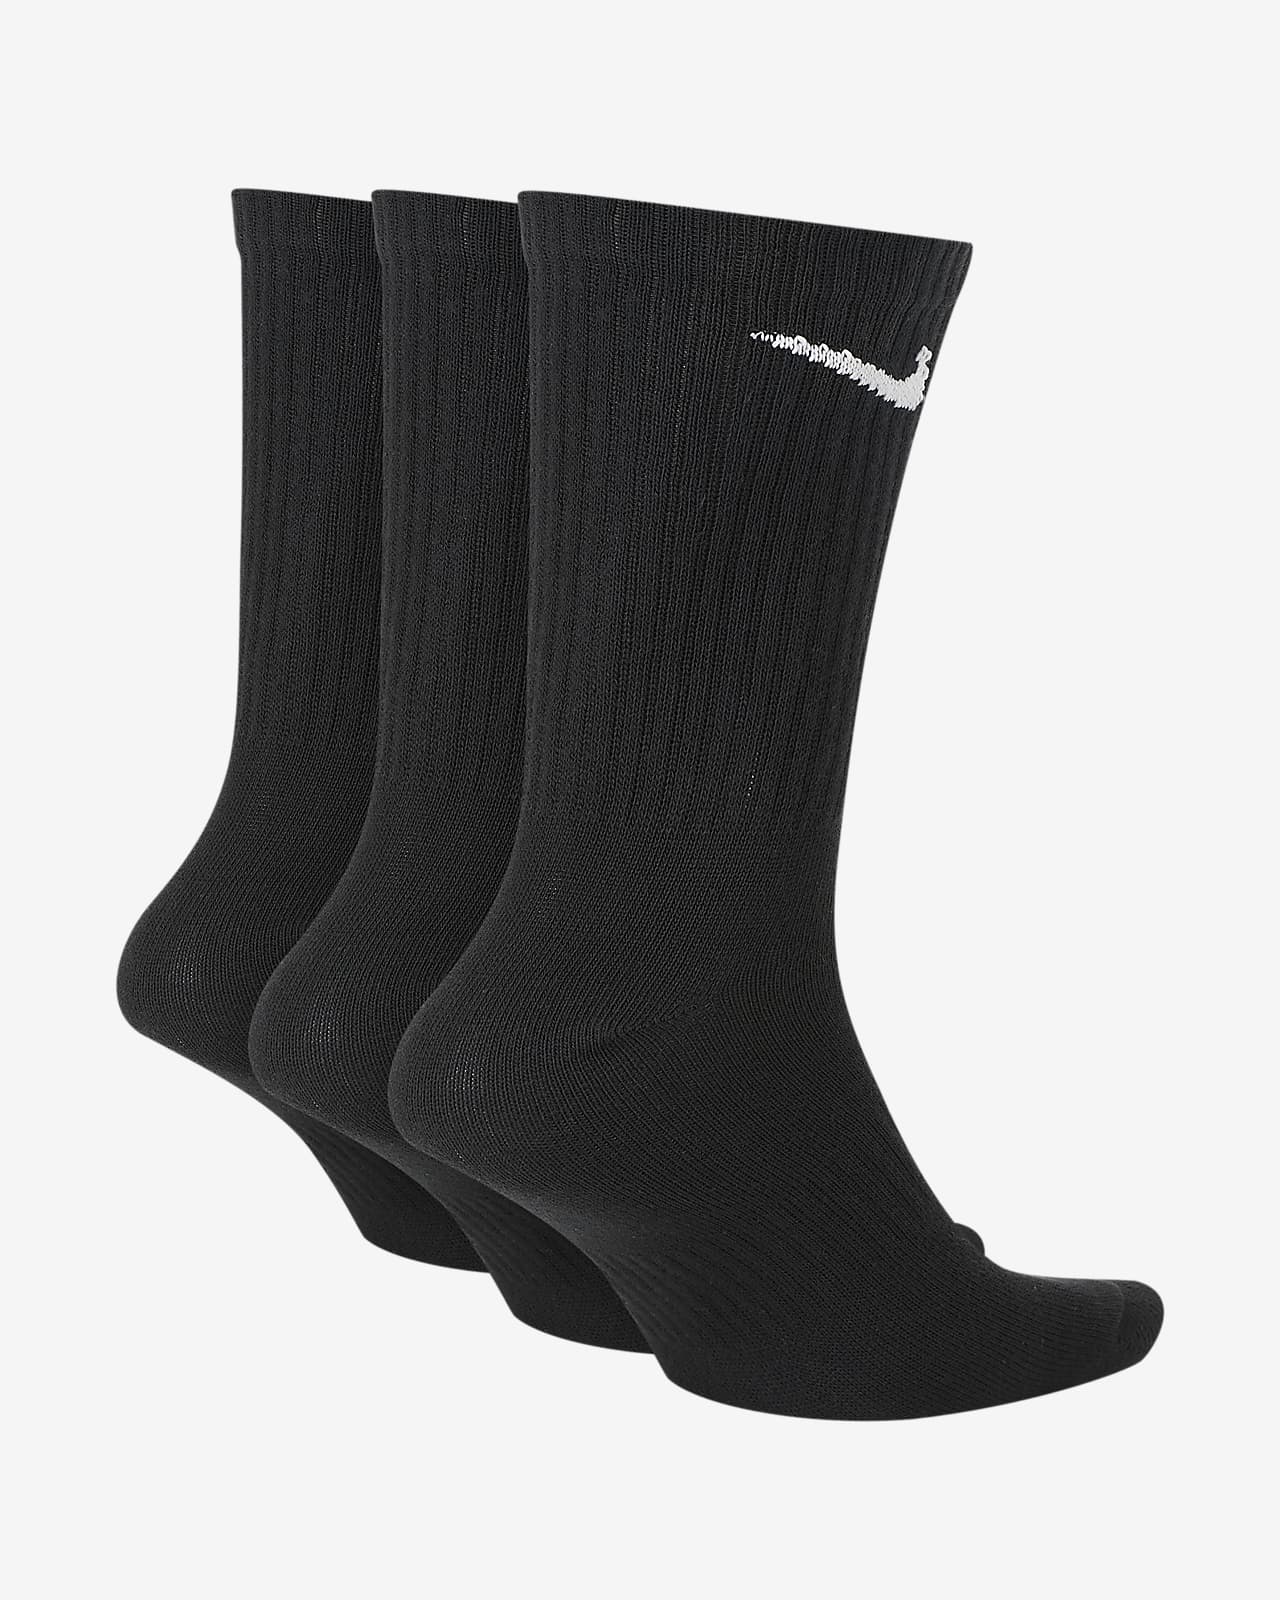 nike lightweight socks